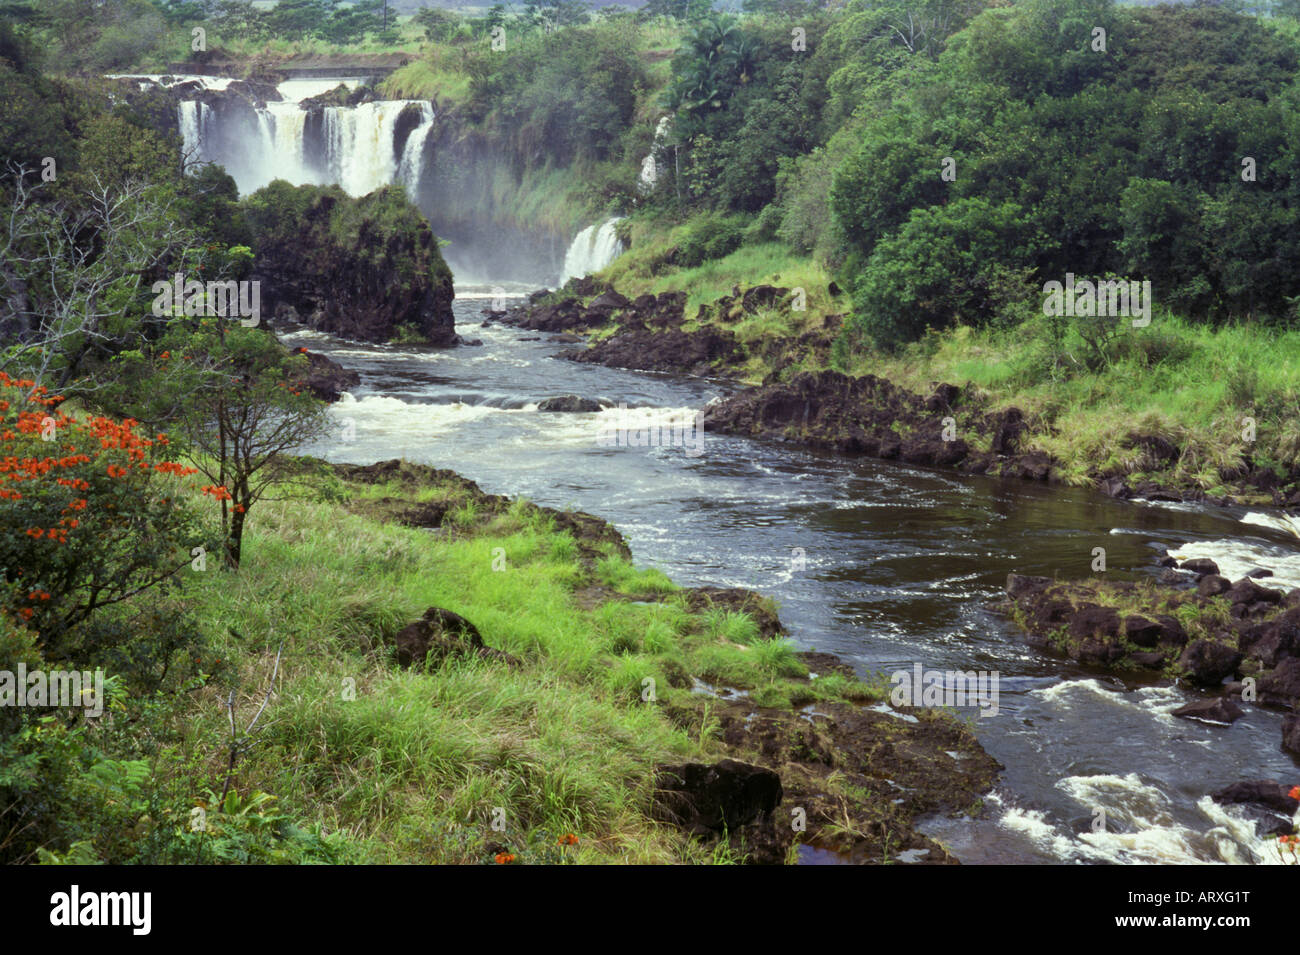 https://c8.alamy.com/comp/ARXG1T/wailuku-river-waterfall-area-known-as-boiling-pots-above-rainbow-falls-ARXG1T.jpg